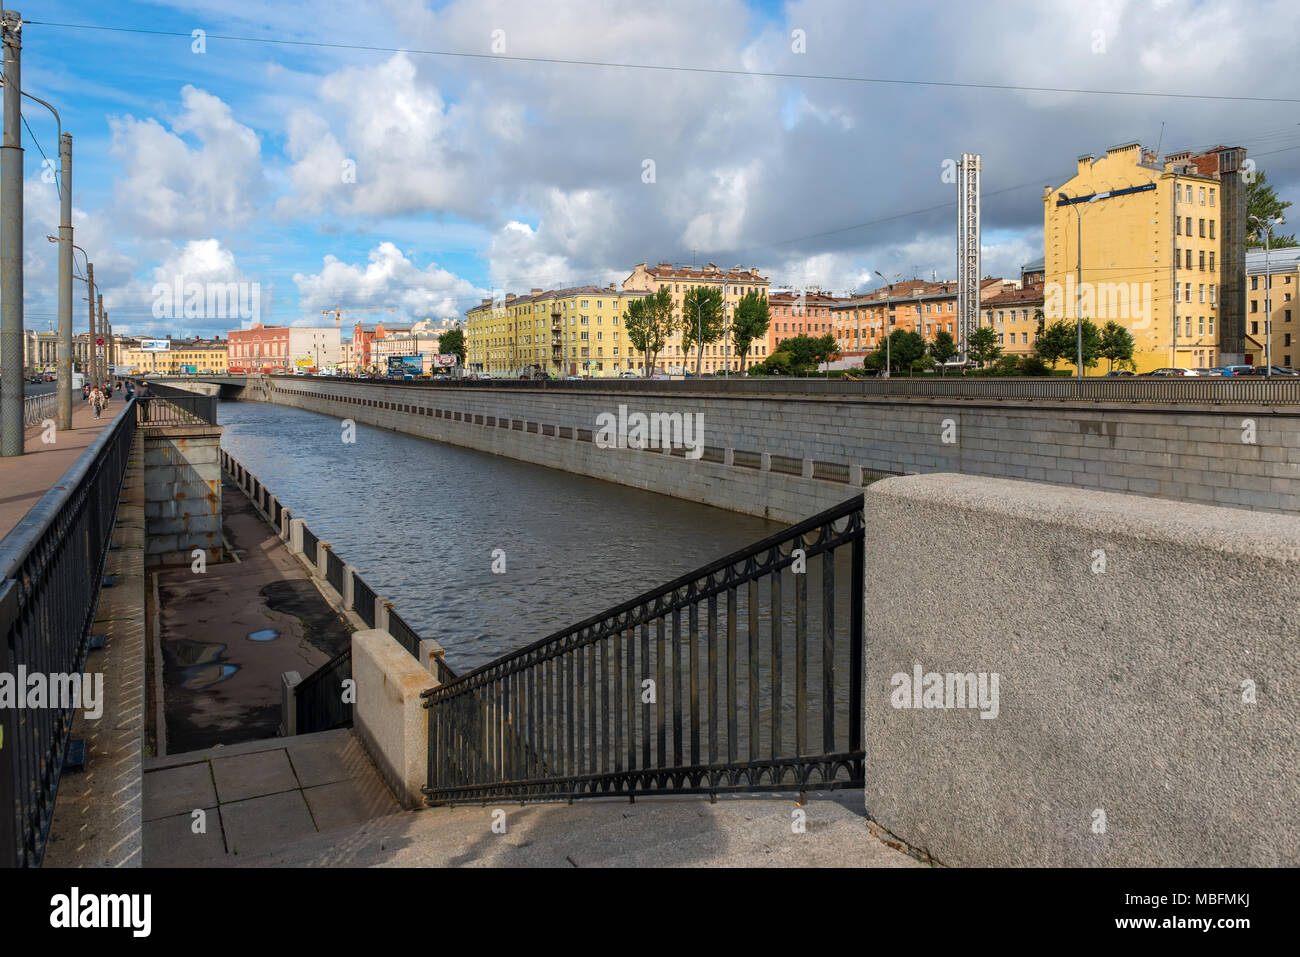 RUSSIA, SAINT PETERSBURG - AUGUST 18, 2017: View of the Obvodnaya Canal from the Novo-Kamenny bridge on Ligovsky prospect Stock Photo